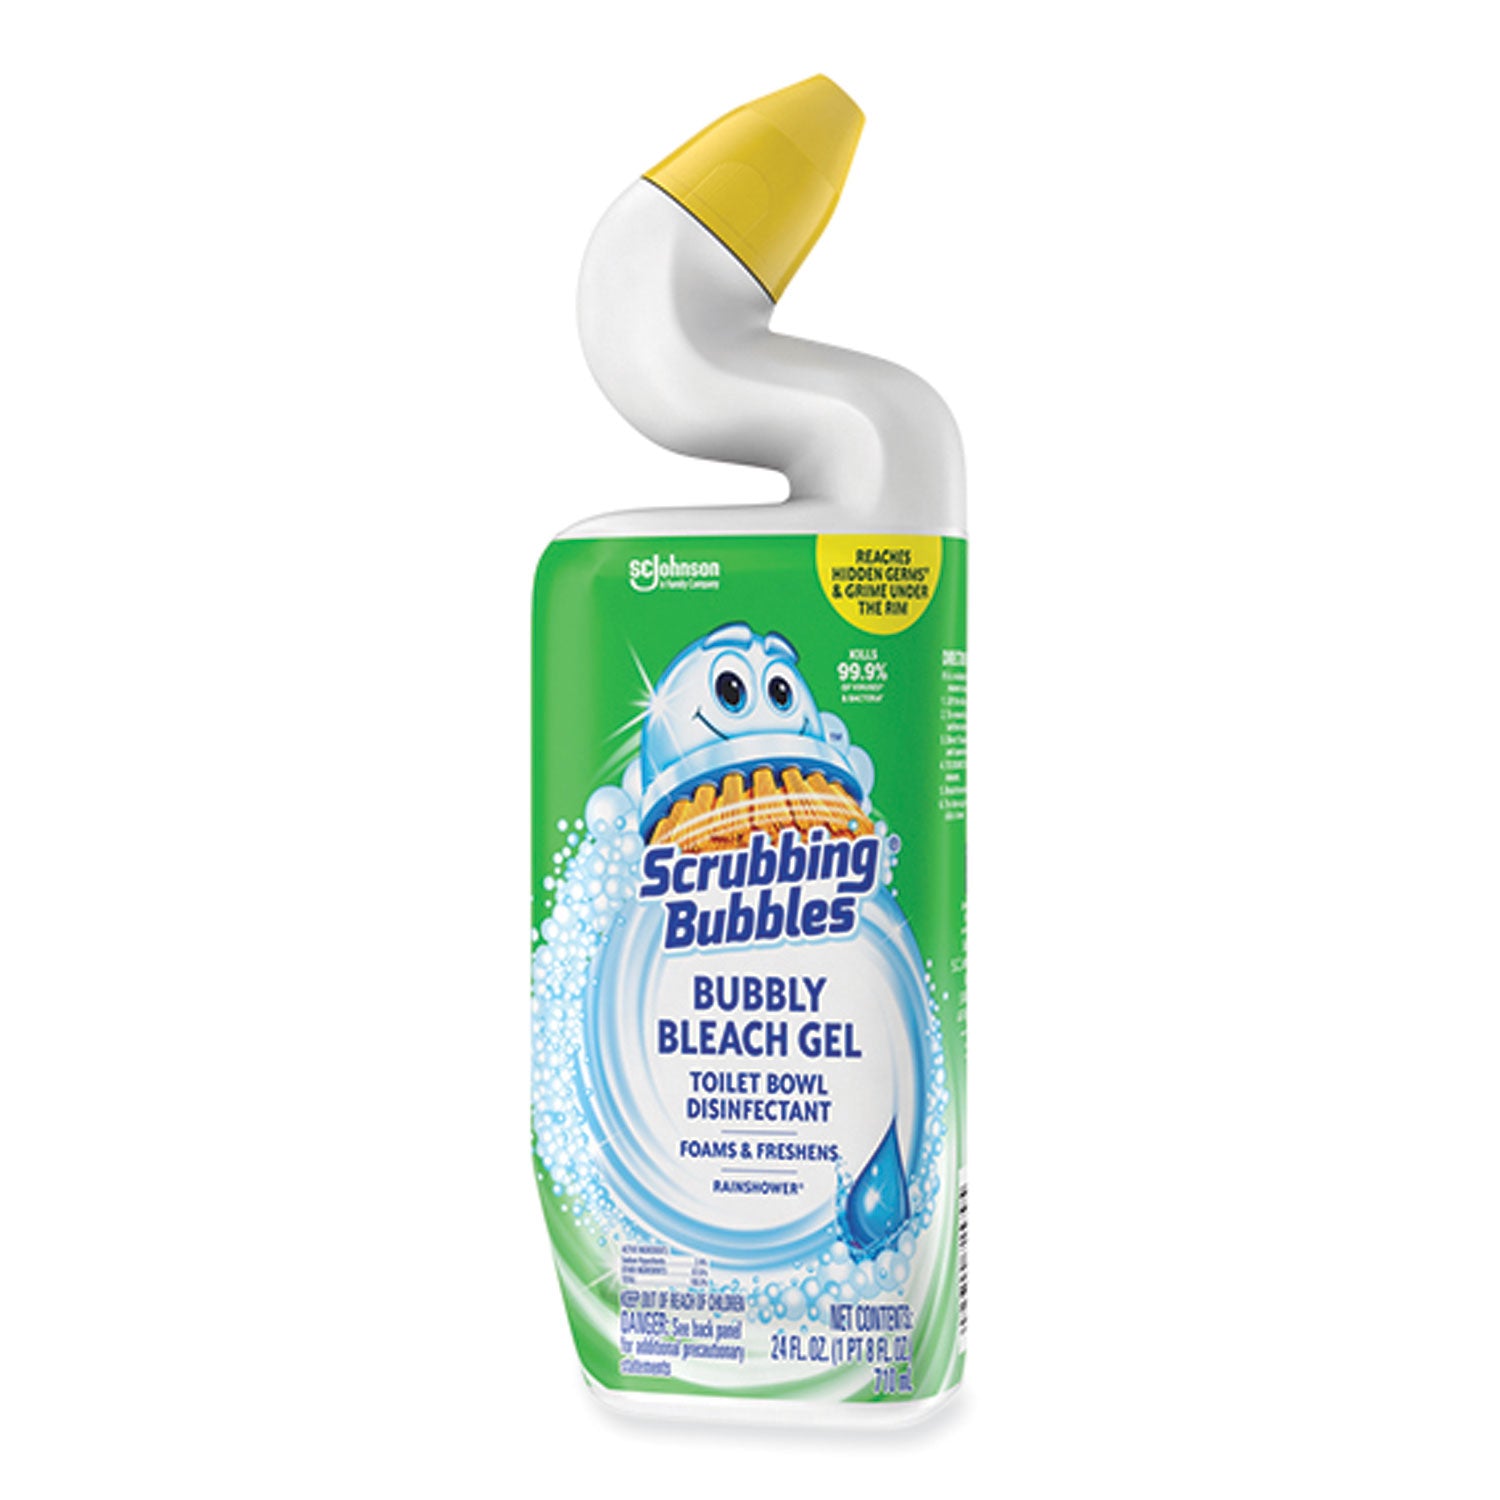 bubbly-bleach-gel-disinfecting-toilet-bowl-cleaner-rainshower-scent-24-oz-bottle_sjn309106 - 1